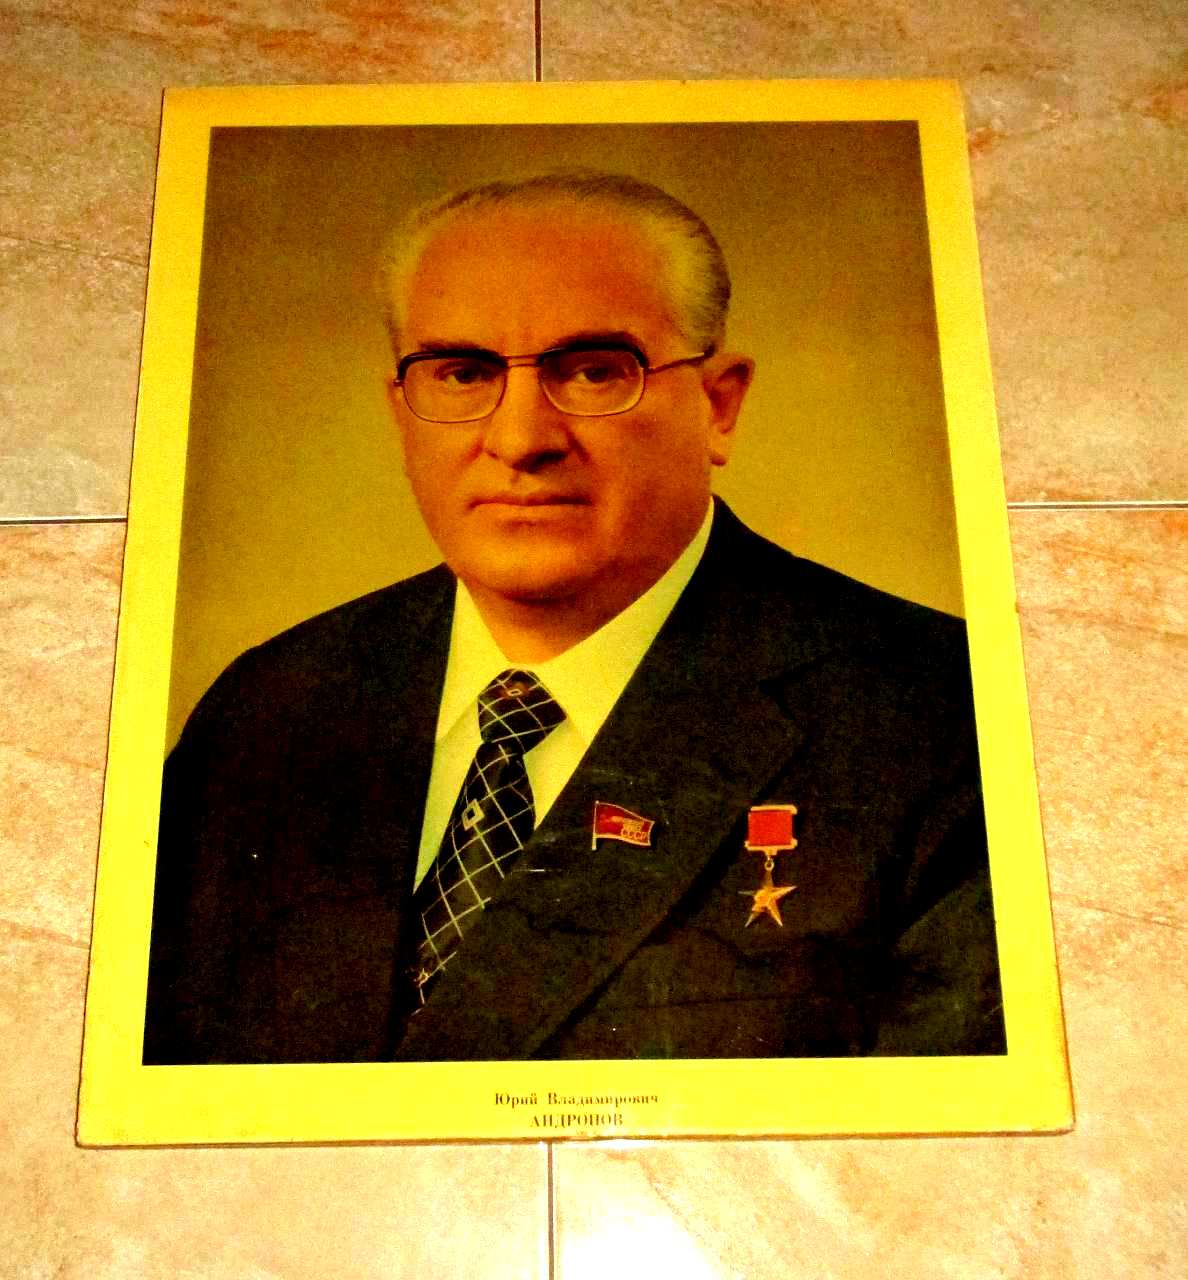 Андропов 1980 портрет